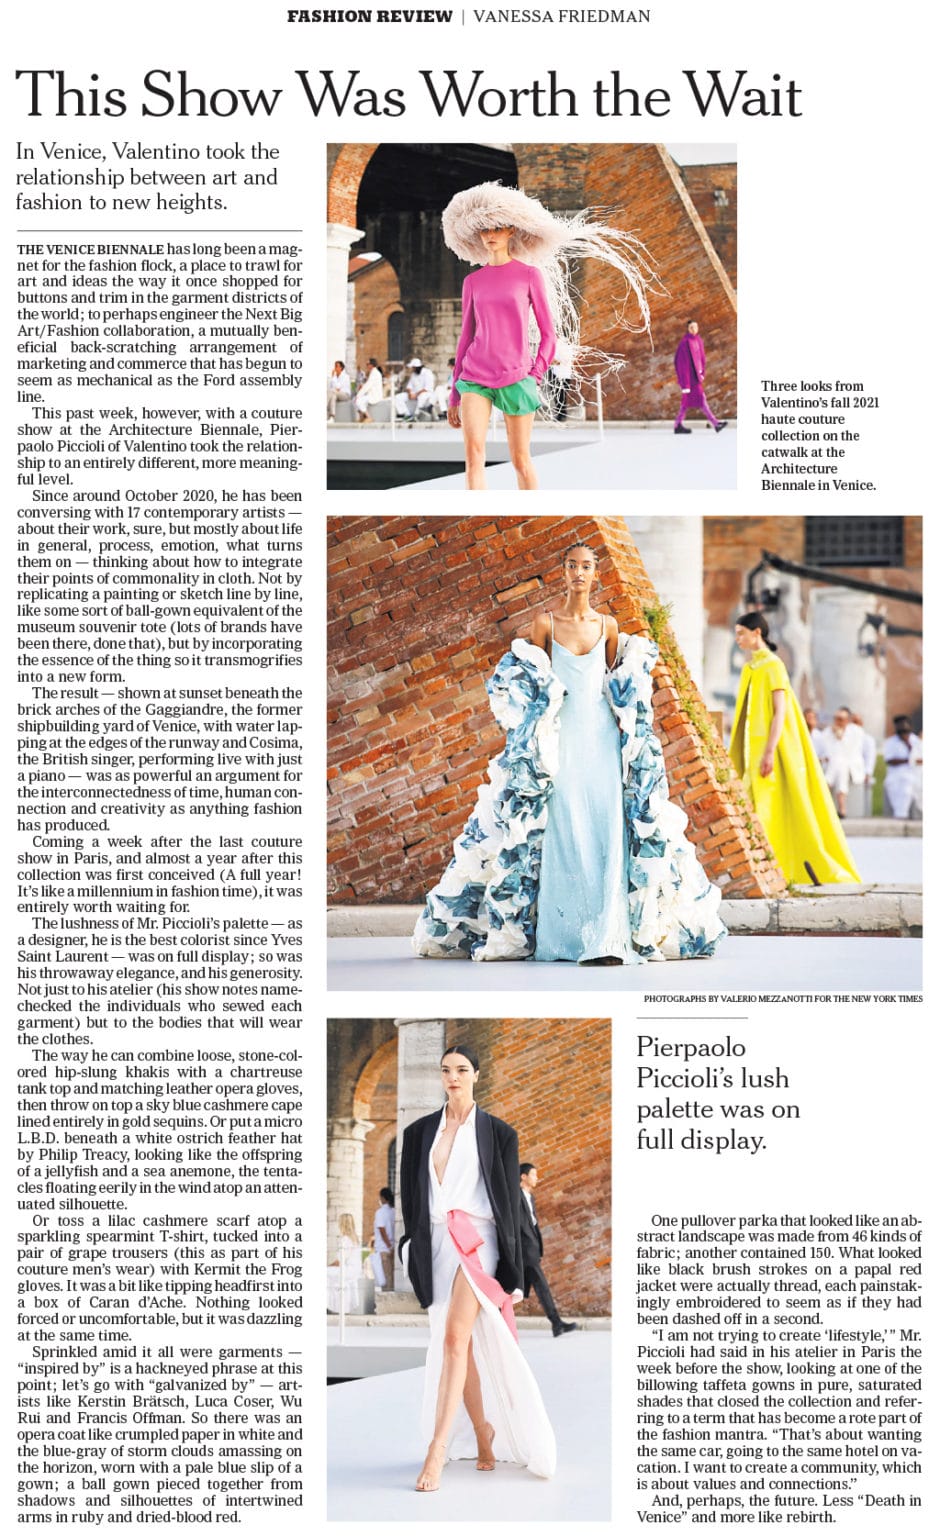 Valentino Fashion show, Photo by Valerio Mezzanotti for The New York Times